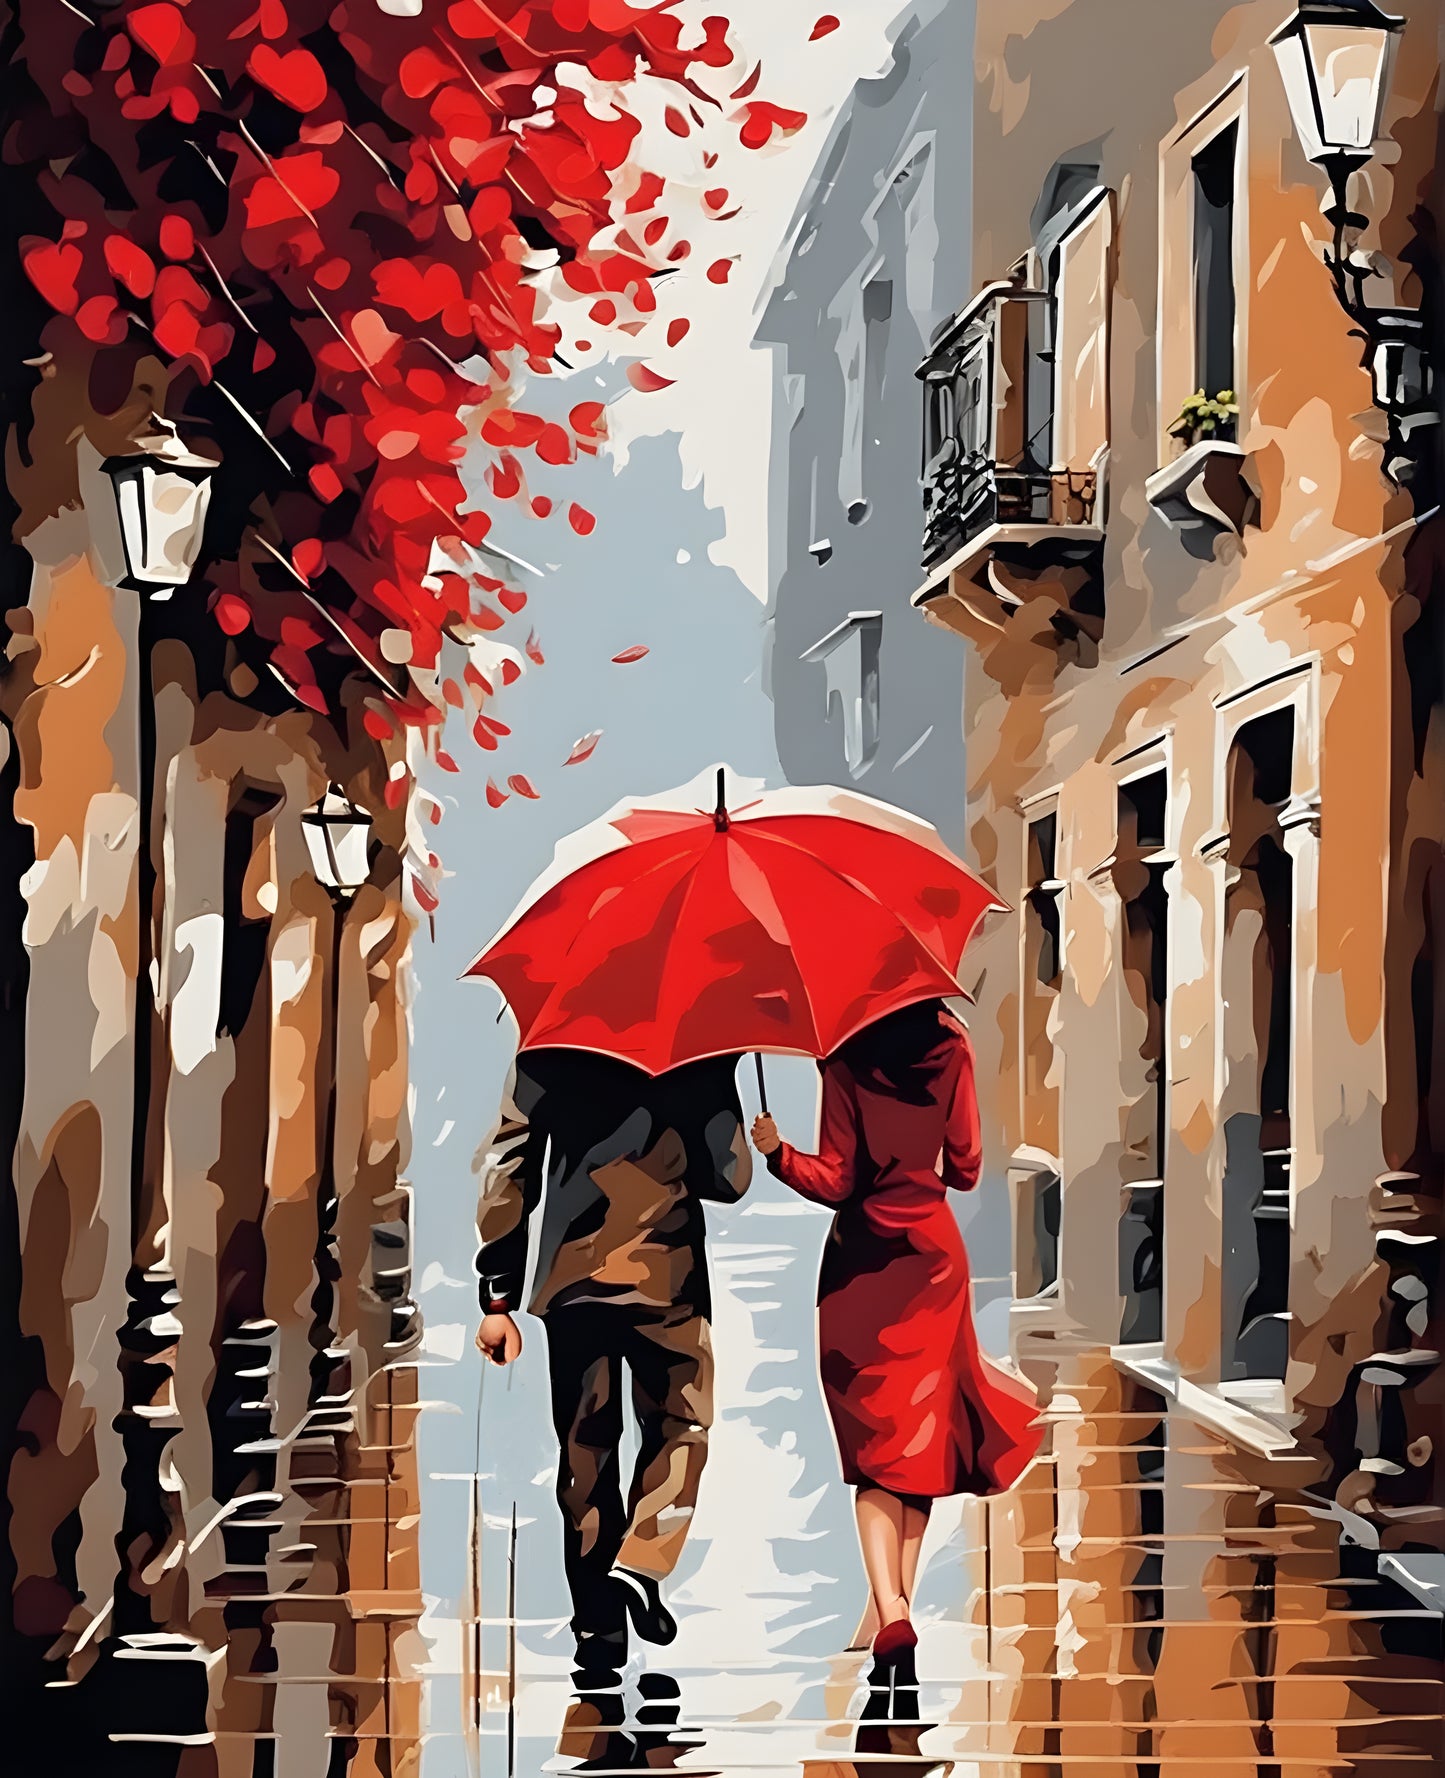 Red Umbrella (1) - Van-Go Paint-By-Number Kit